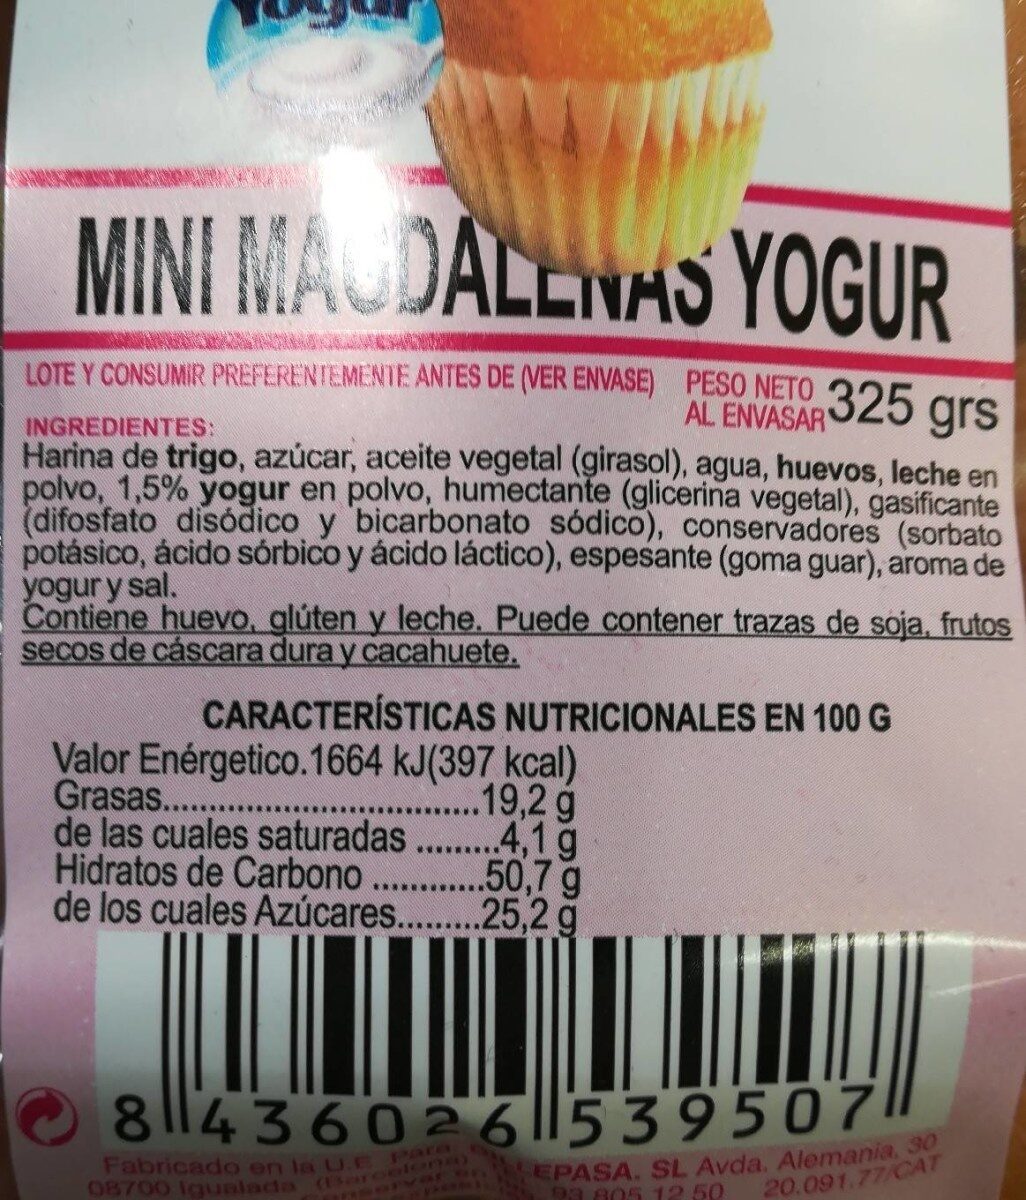 Mini magdalenas yogur - Nutrition facts - es